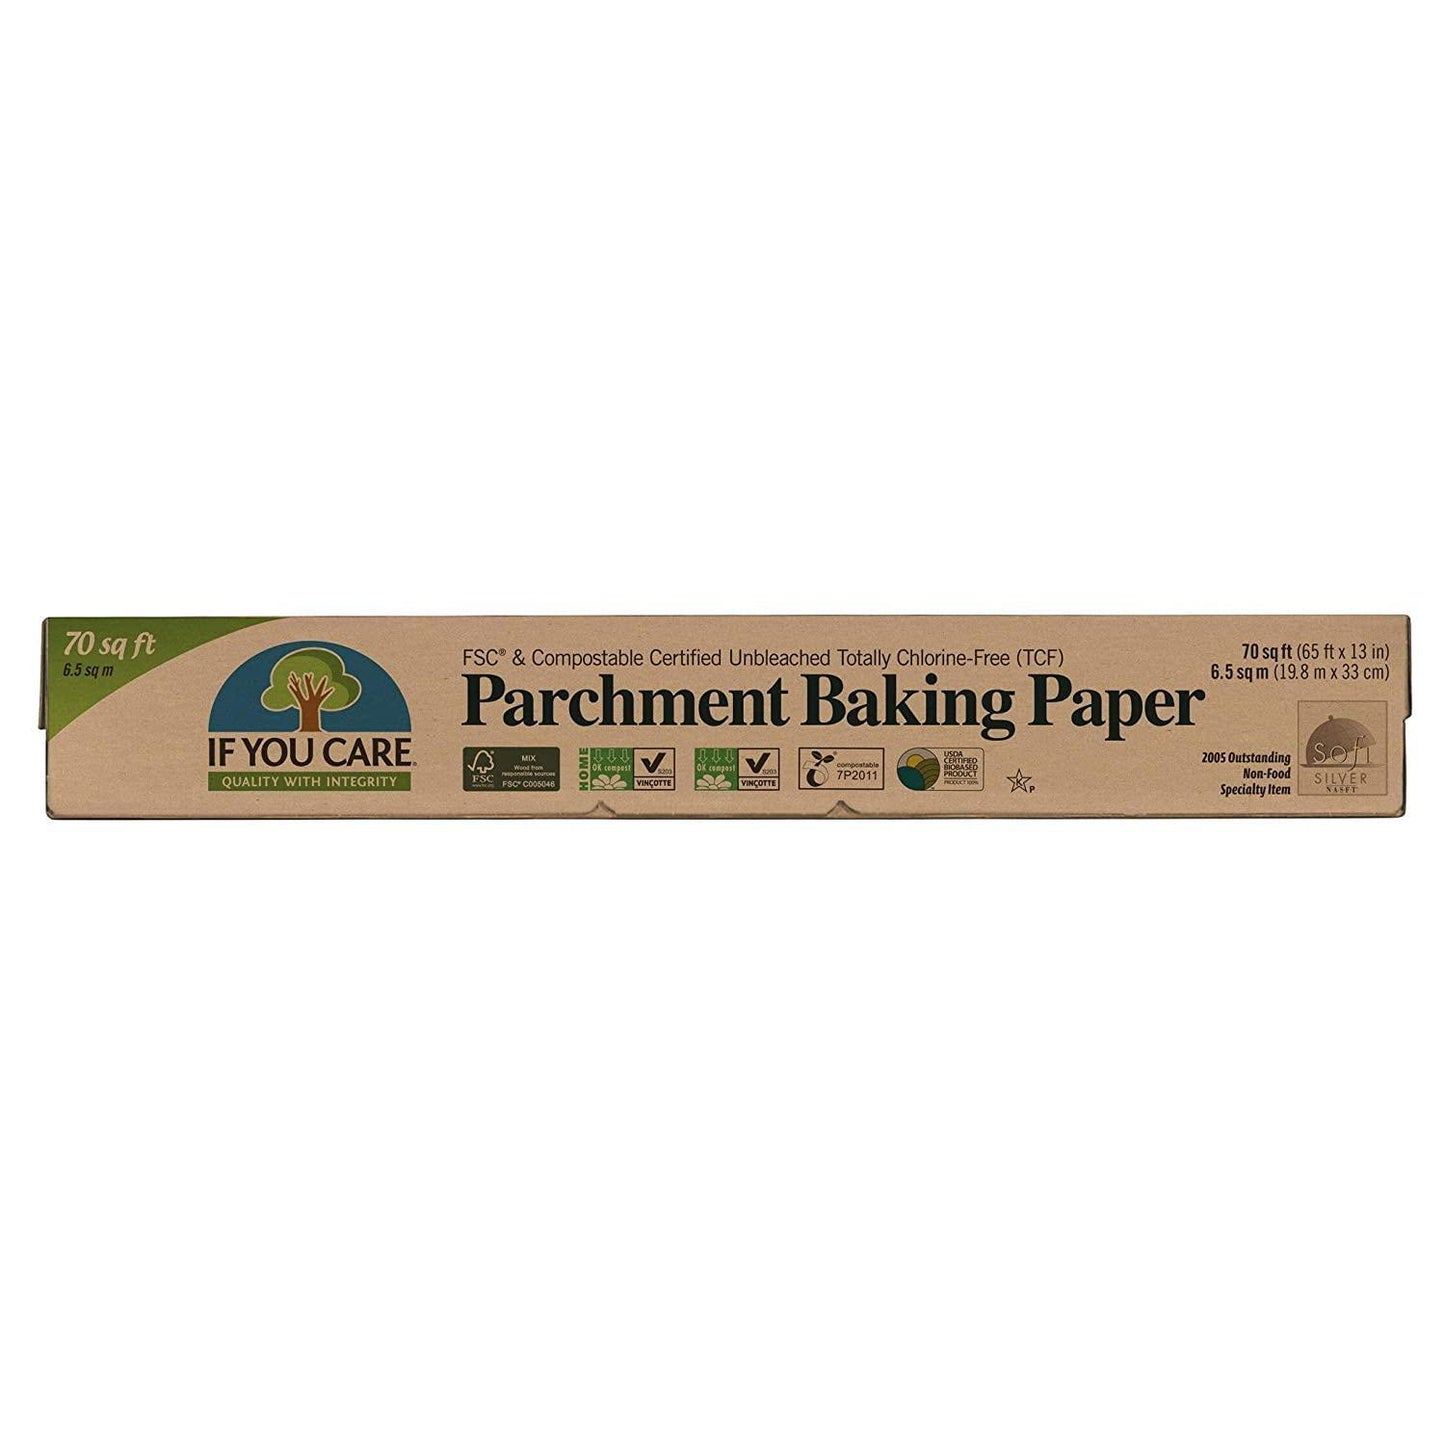 If You Care - Parchment Baking Paper (70 SQFT)